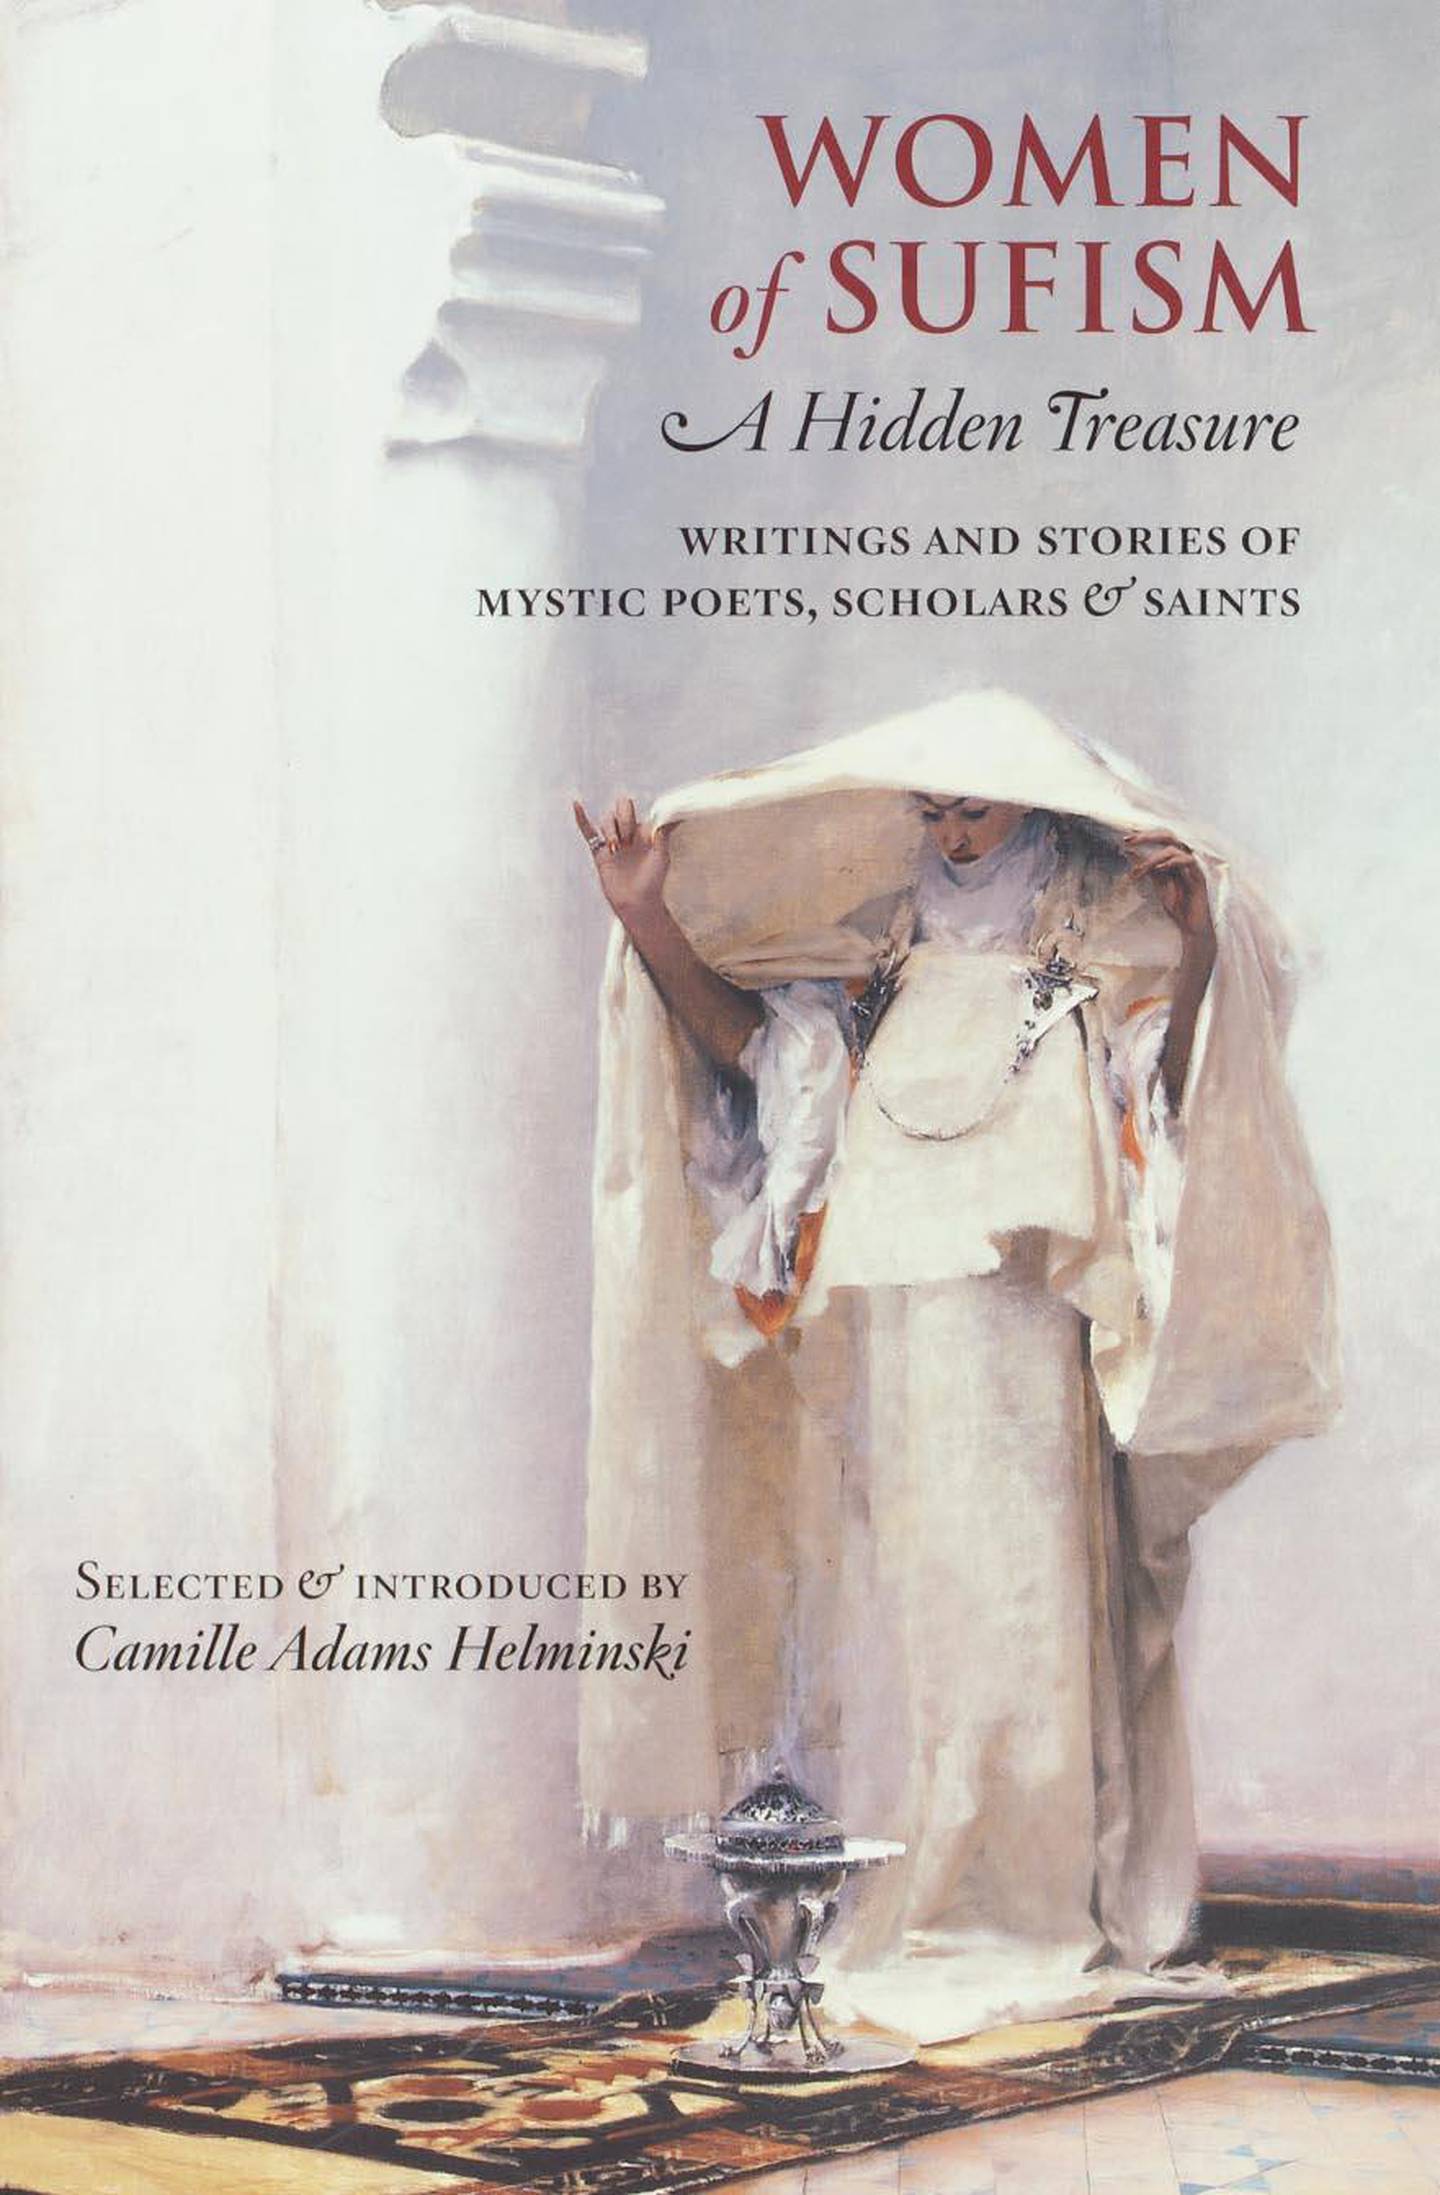 Women Of Sufism: A Hidden Treasure by Camille Adams Helminski. Courtesy Penguin Random House